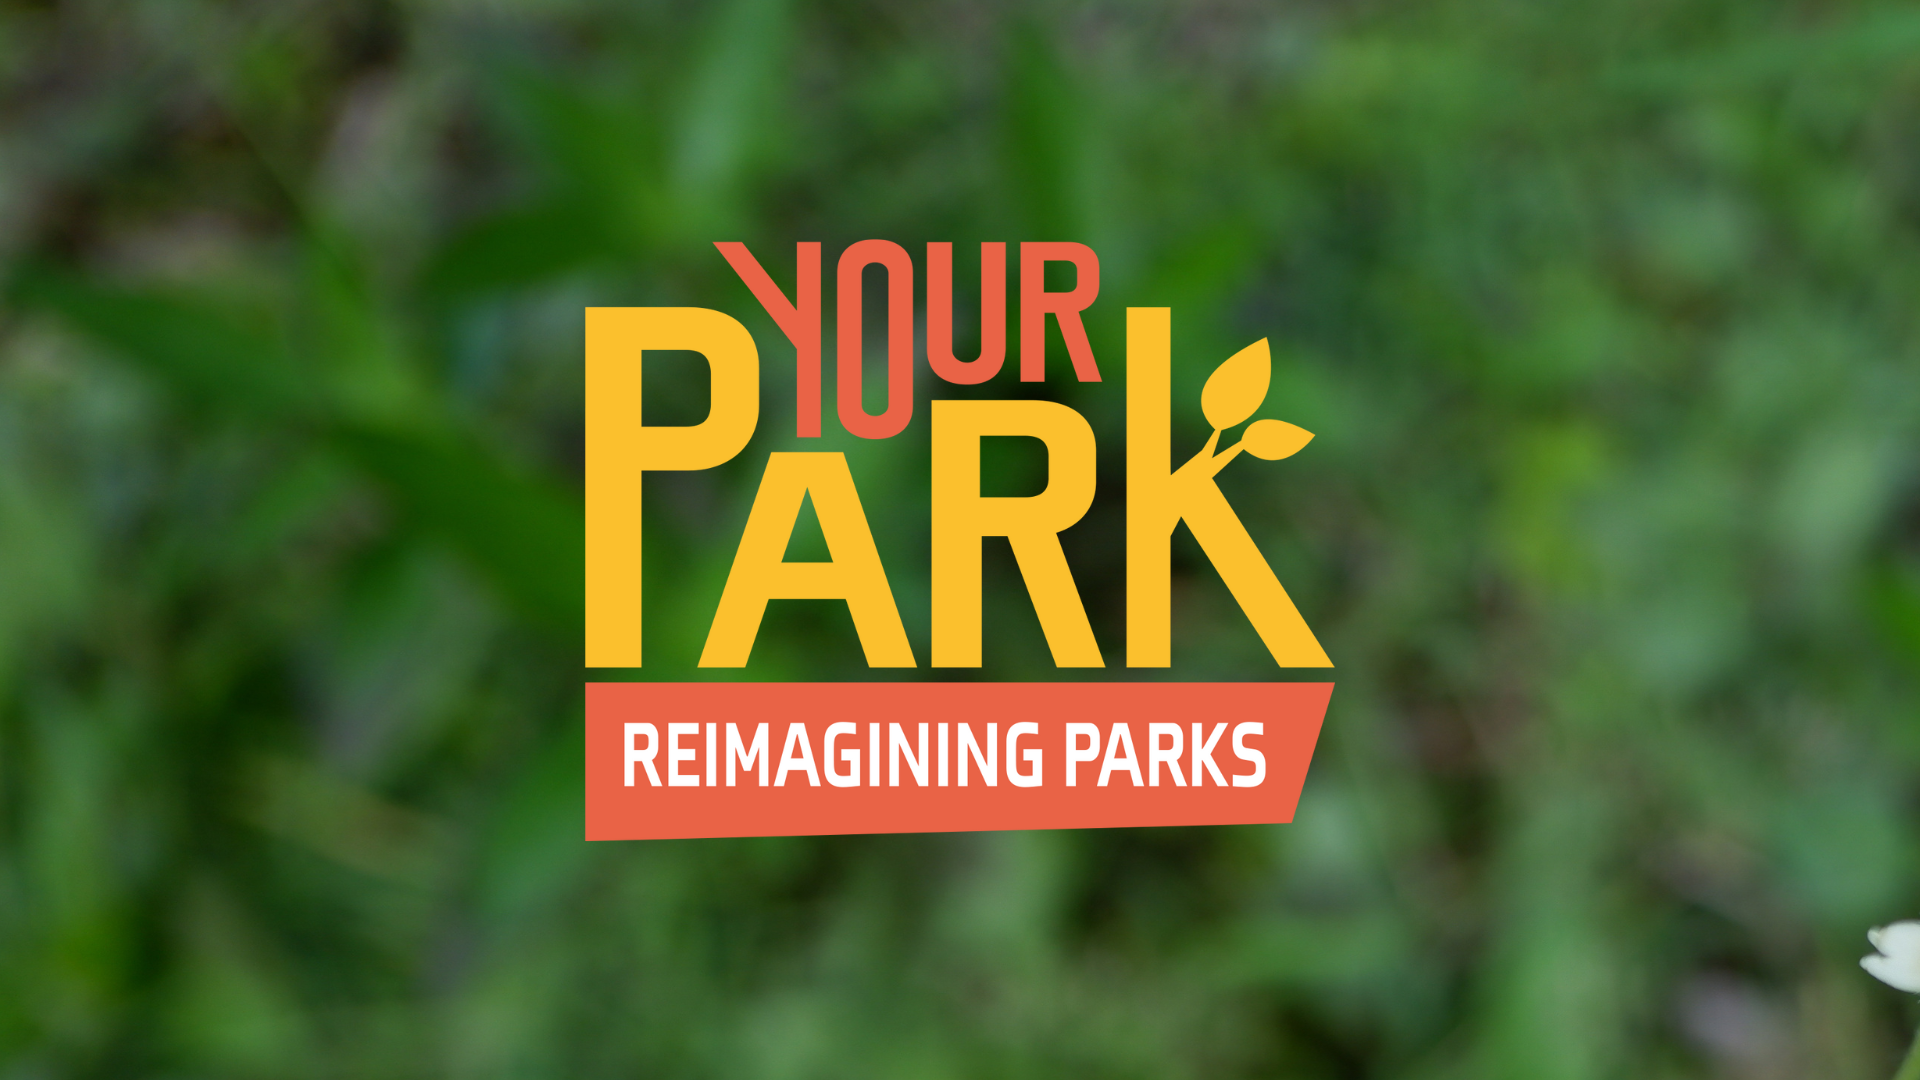 Reimagining parks